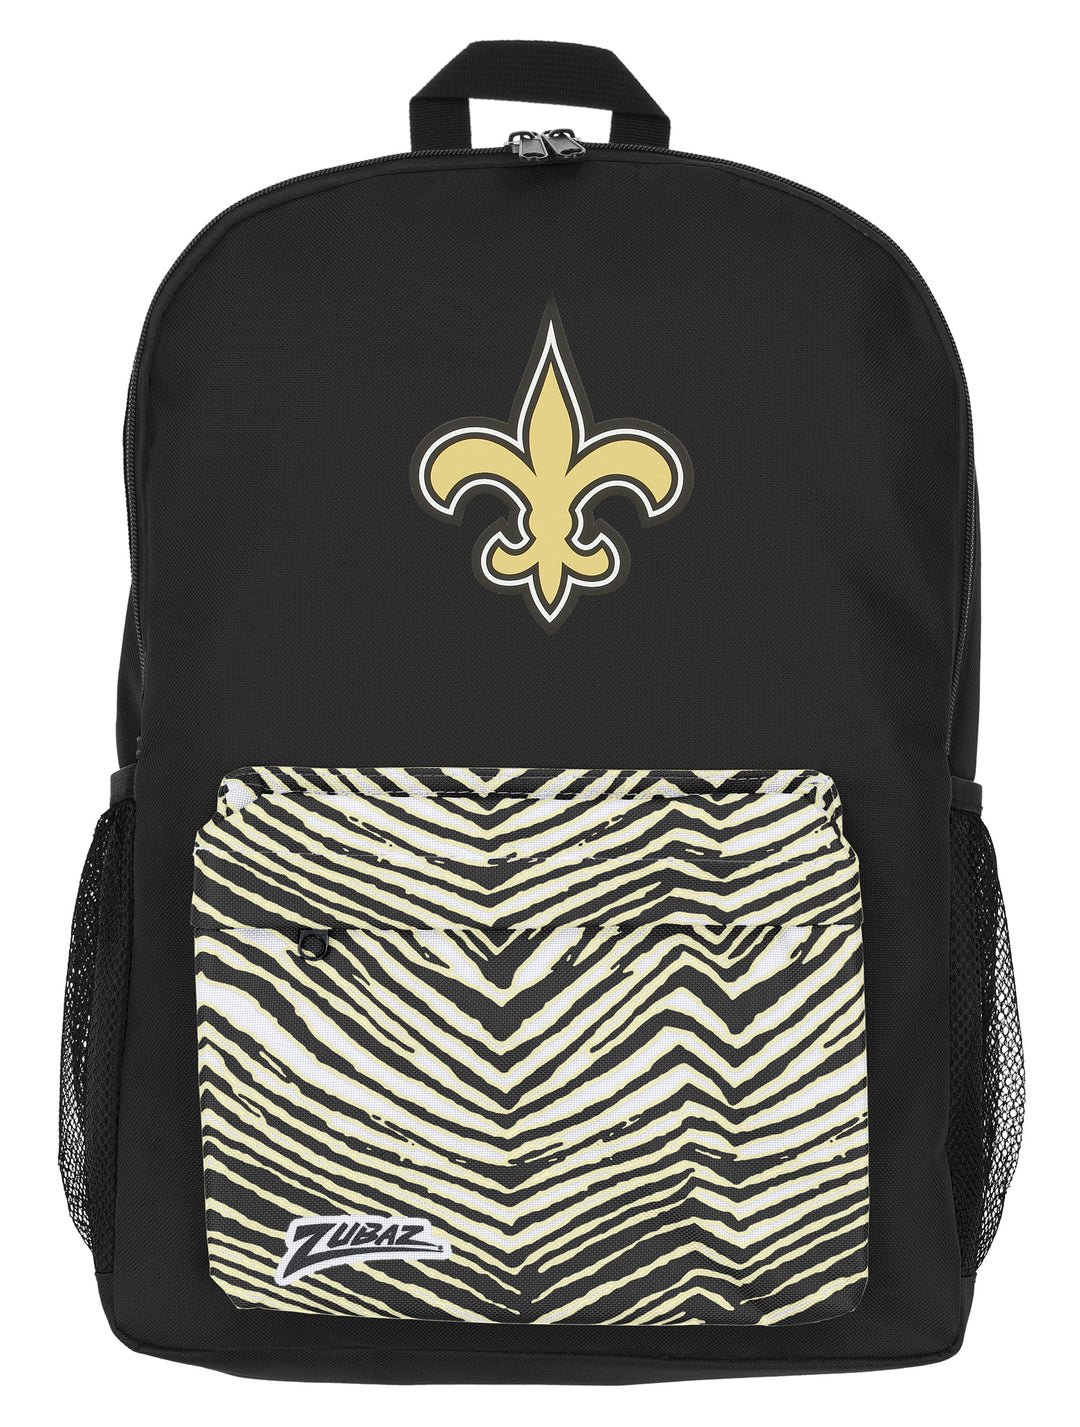 FOCO X ZUBAZ NFL New Orleans Saints Zebra 2 Collab Printed Backpack